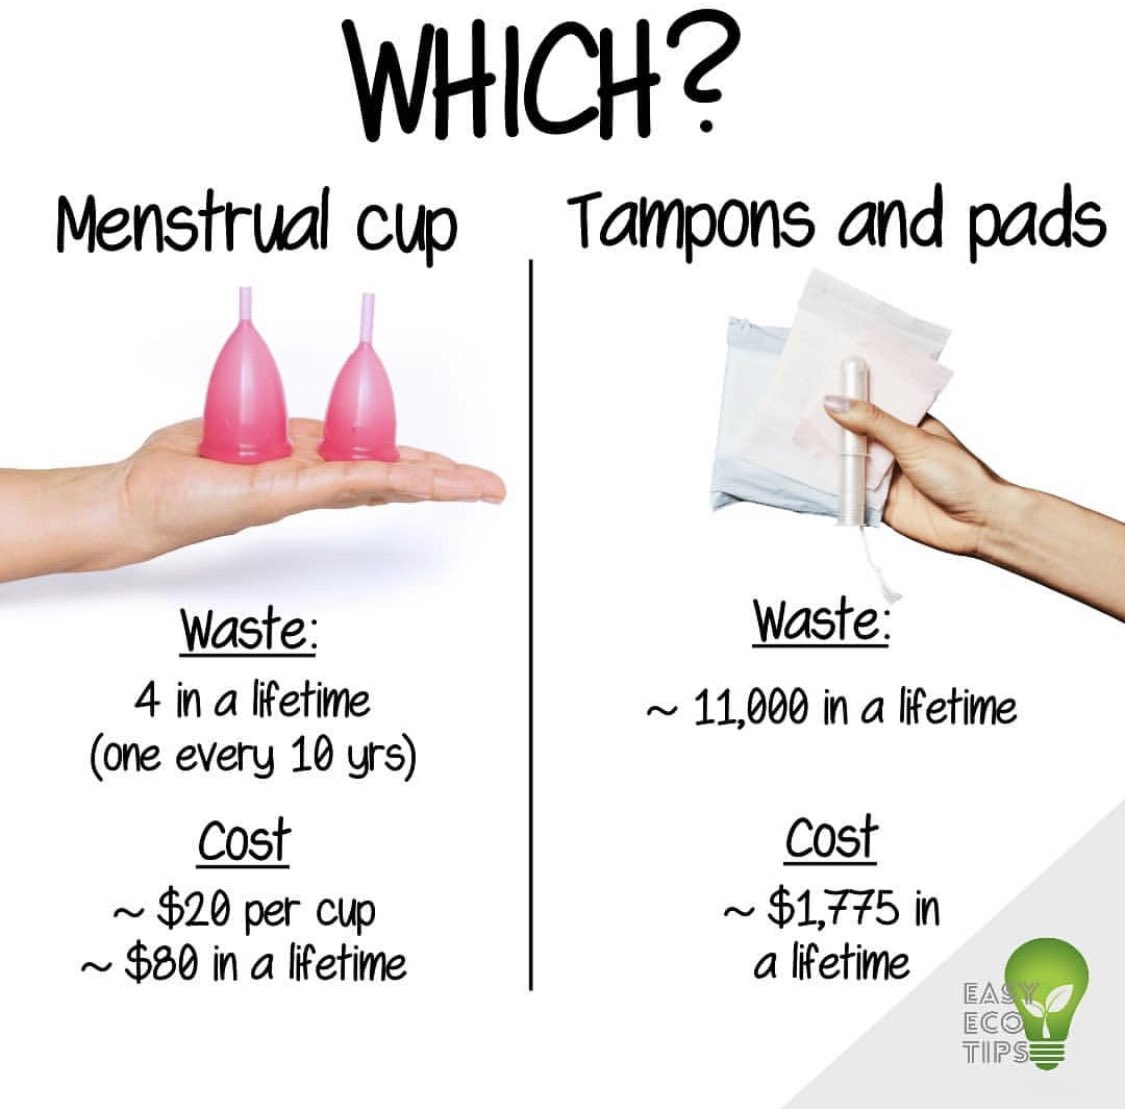 #EnvironmentalBasics
#MenstrualHygeine
#ZeroWasteSolutions

Which side are you on?